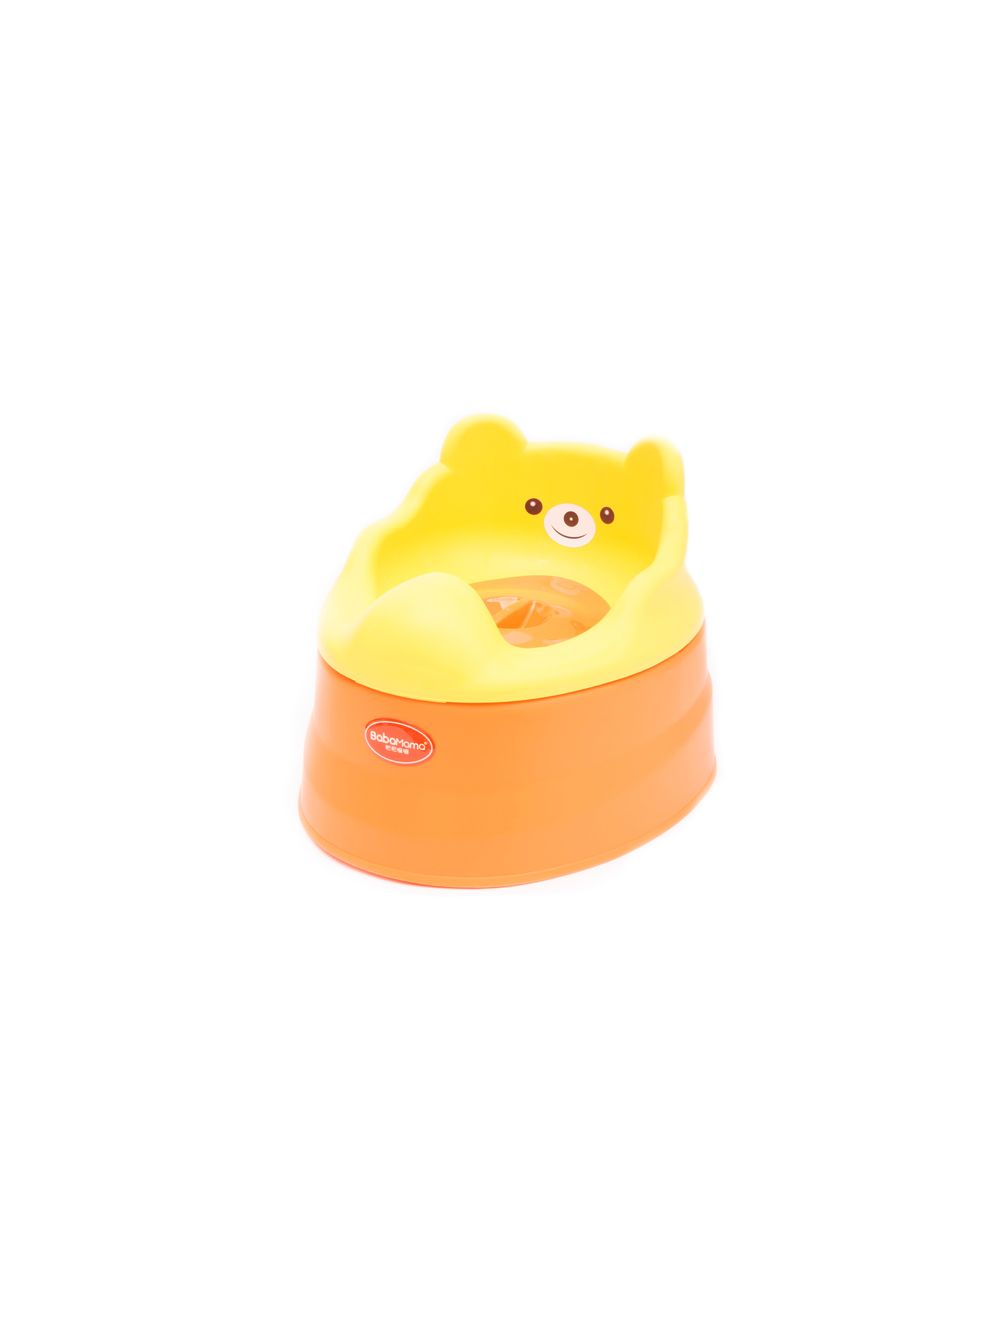 Joymaker Baby Bear Potty Seat Yellow & Orange